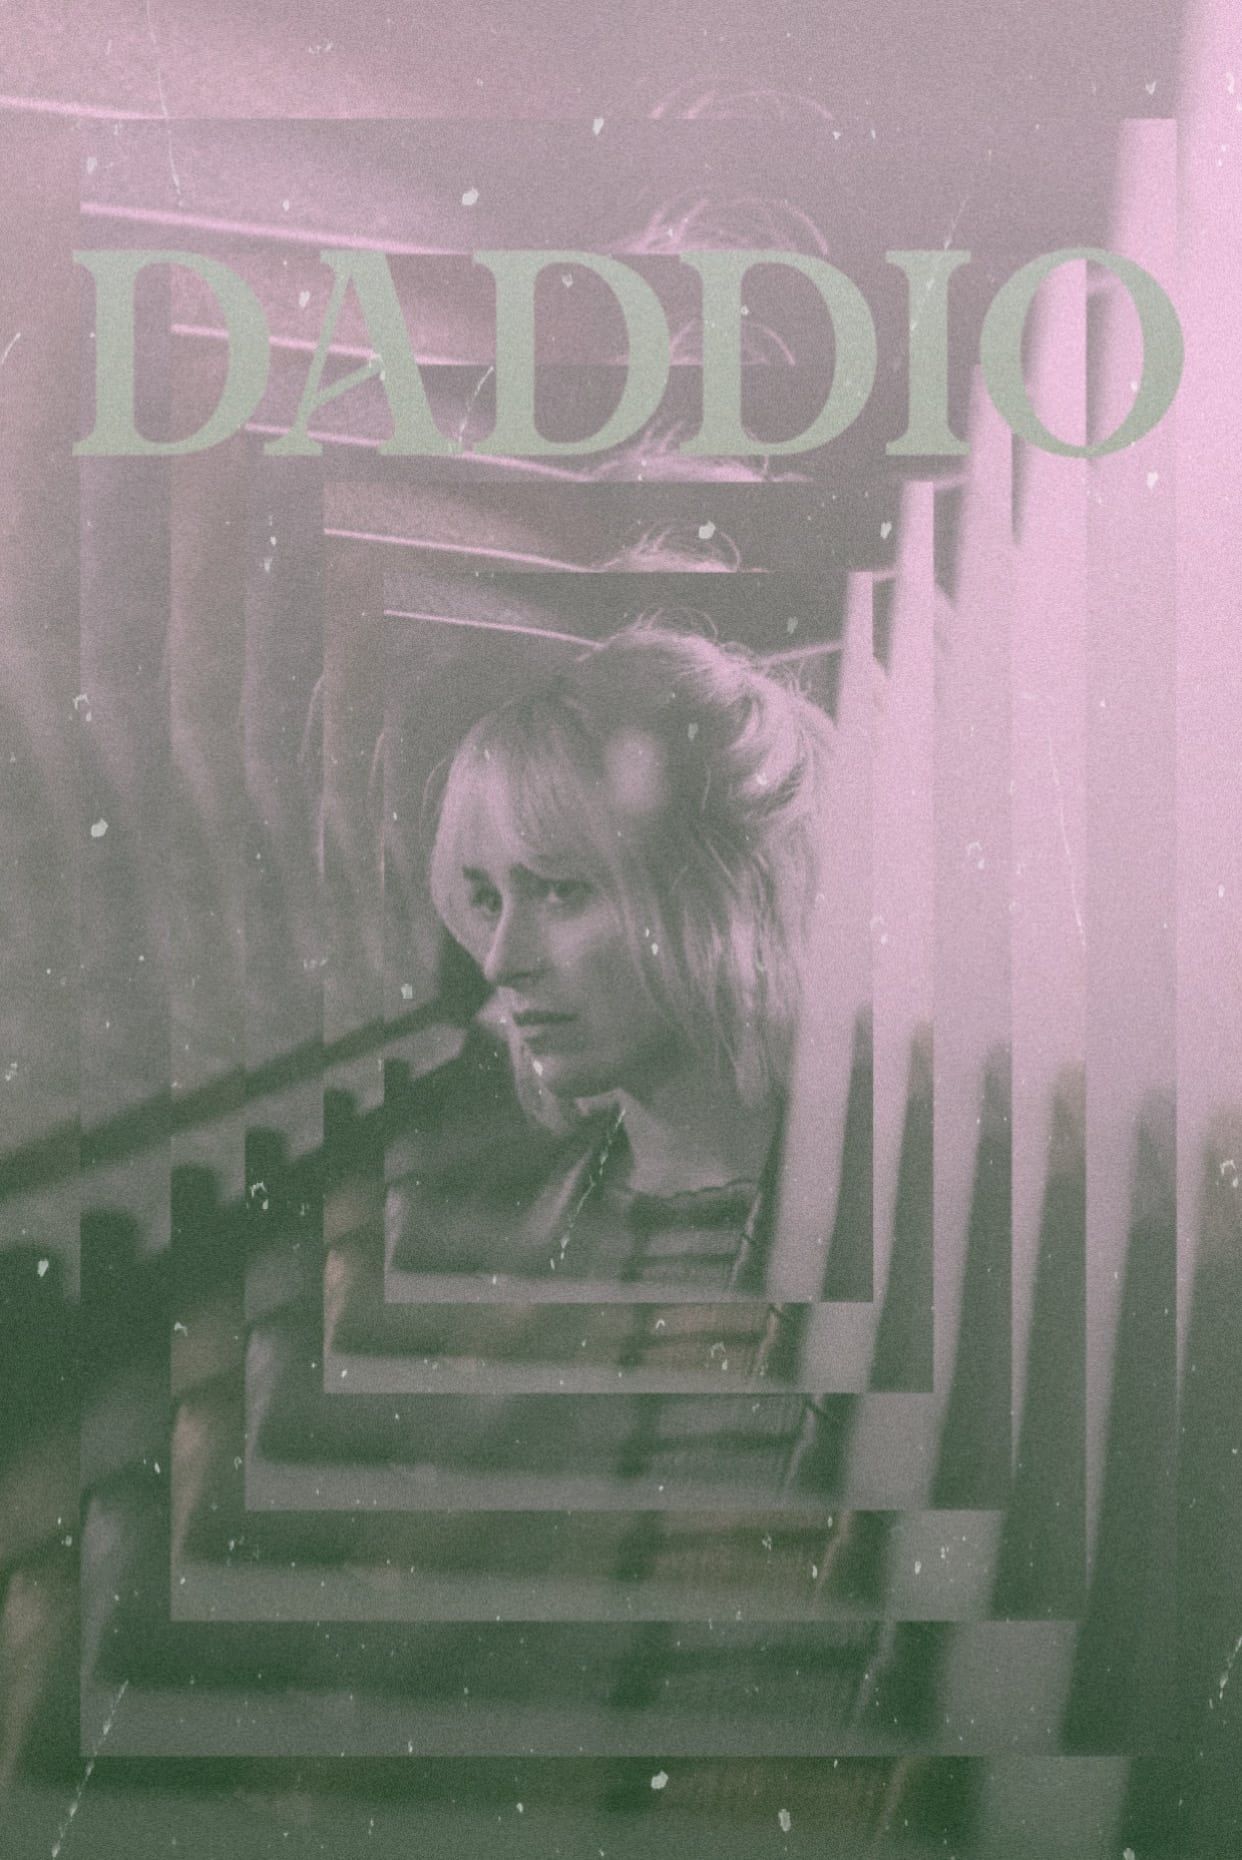 Daddio Film Poster